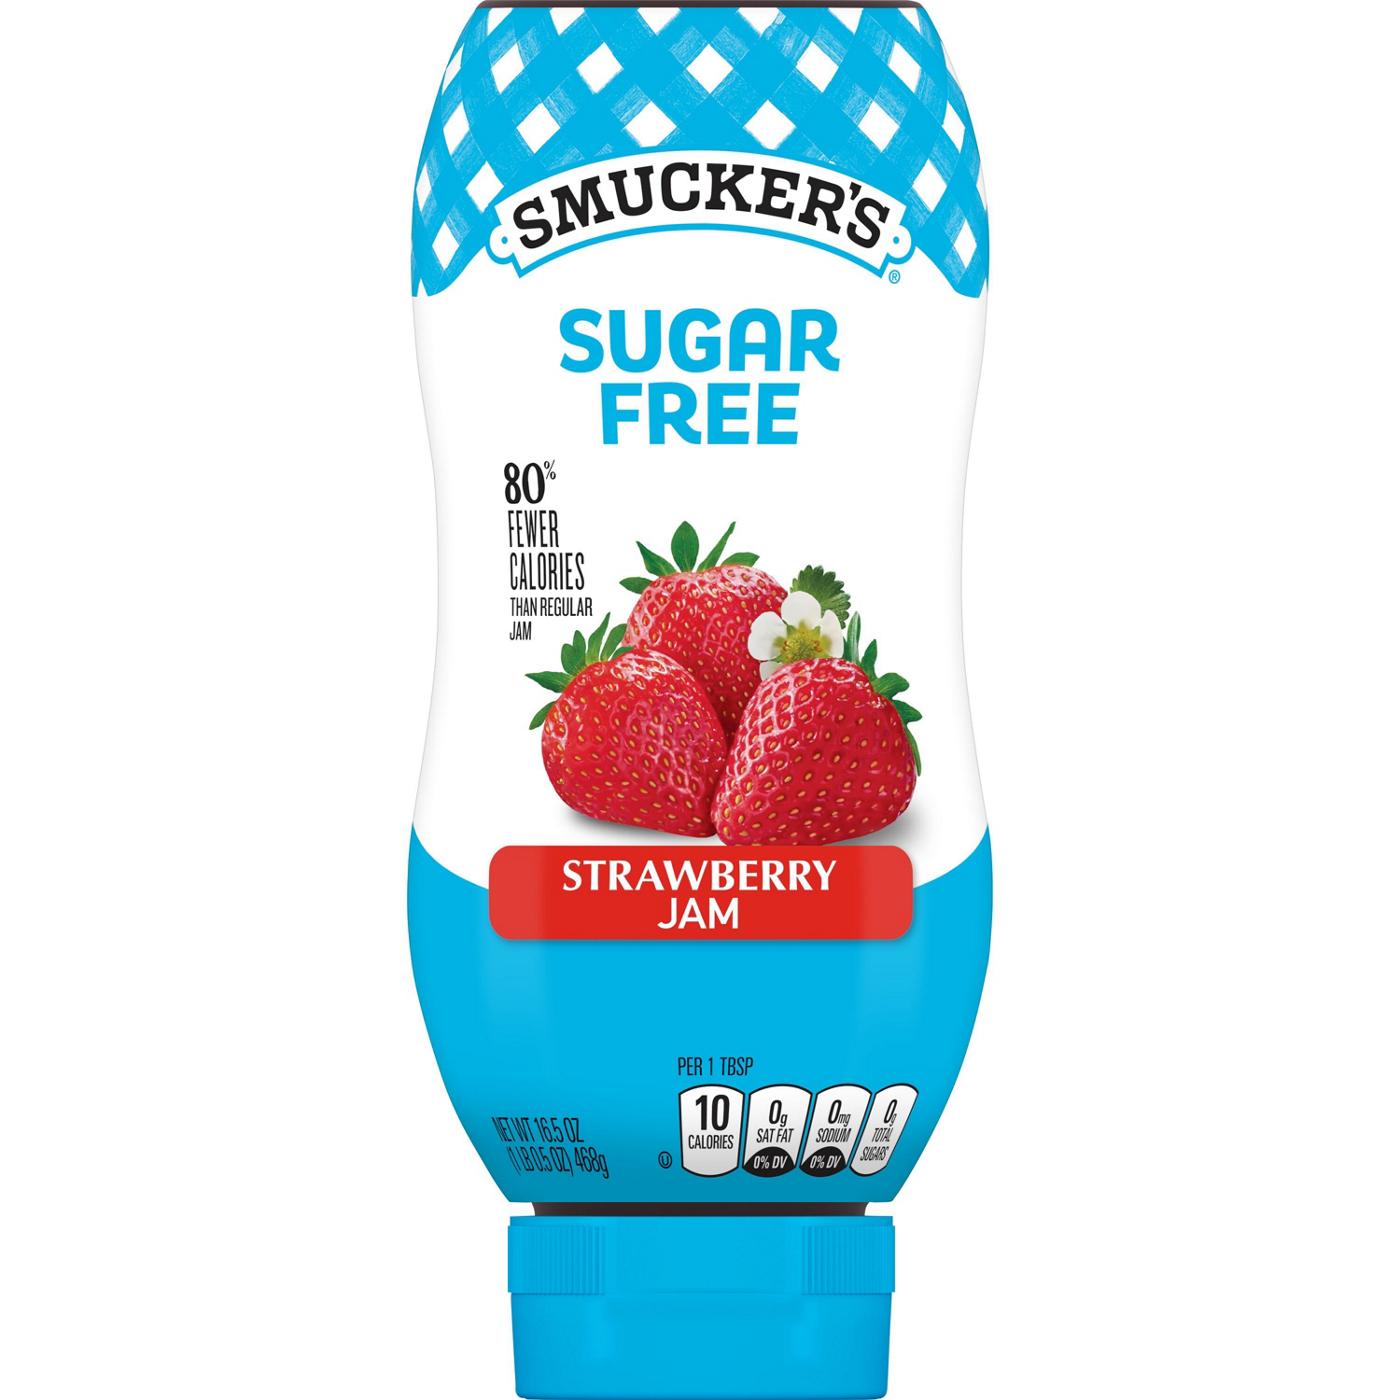 Smucker's Sugar Free Strawberry Jam; image 1 of 3